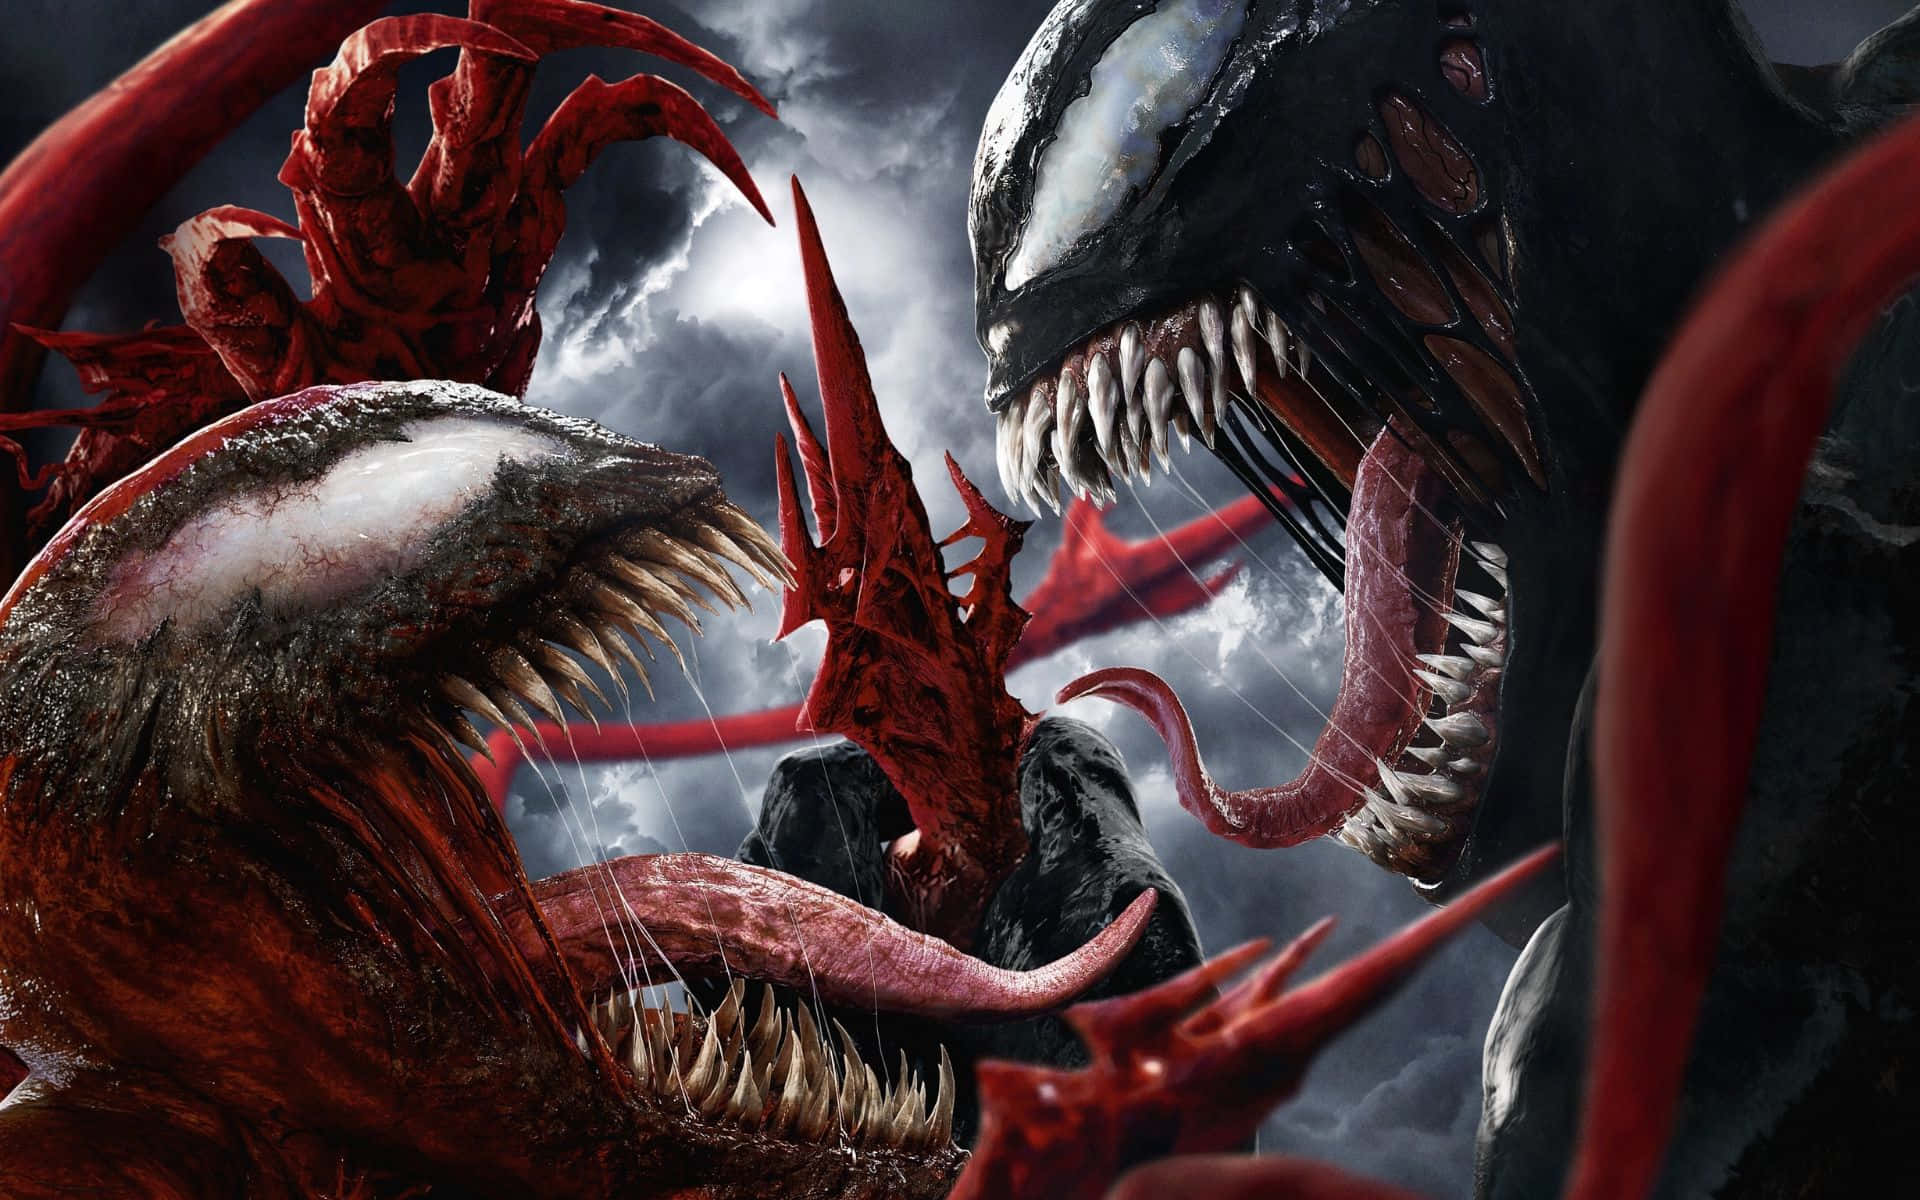 Carnage and Venom Collide in Epic Battle Wallpaper